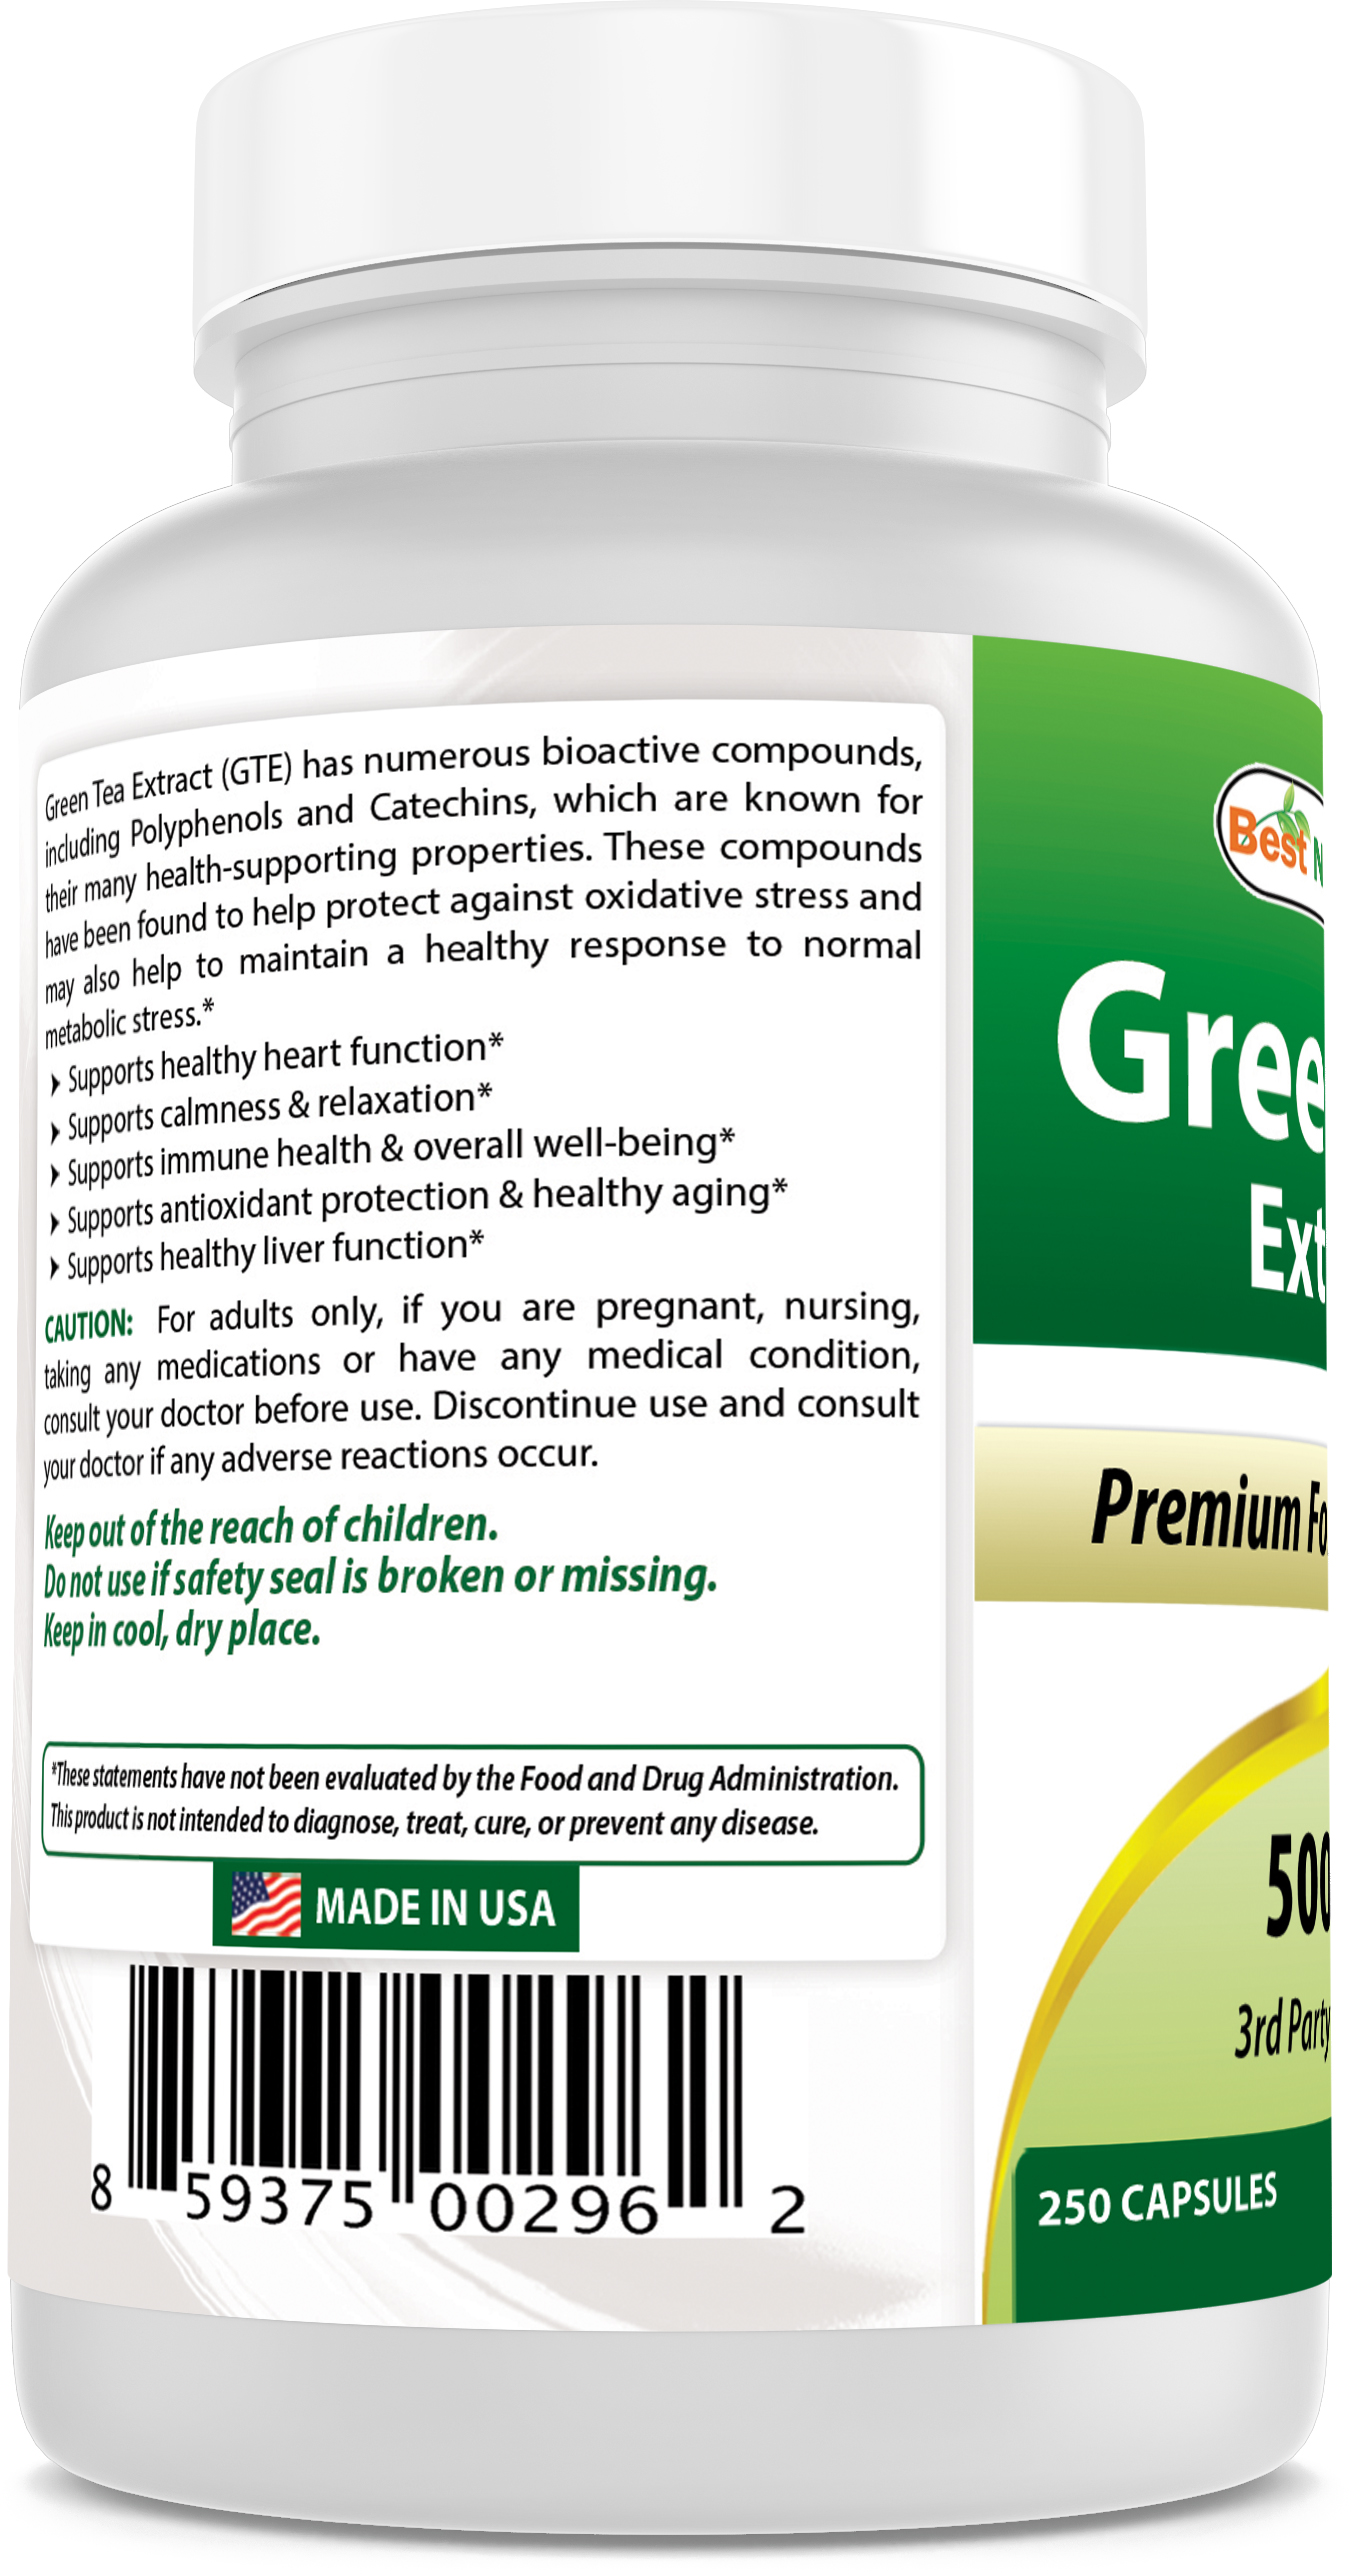 Green Tea Extract - 500mg, 250 Capsules